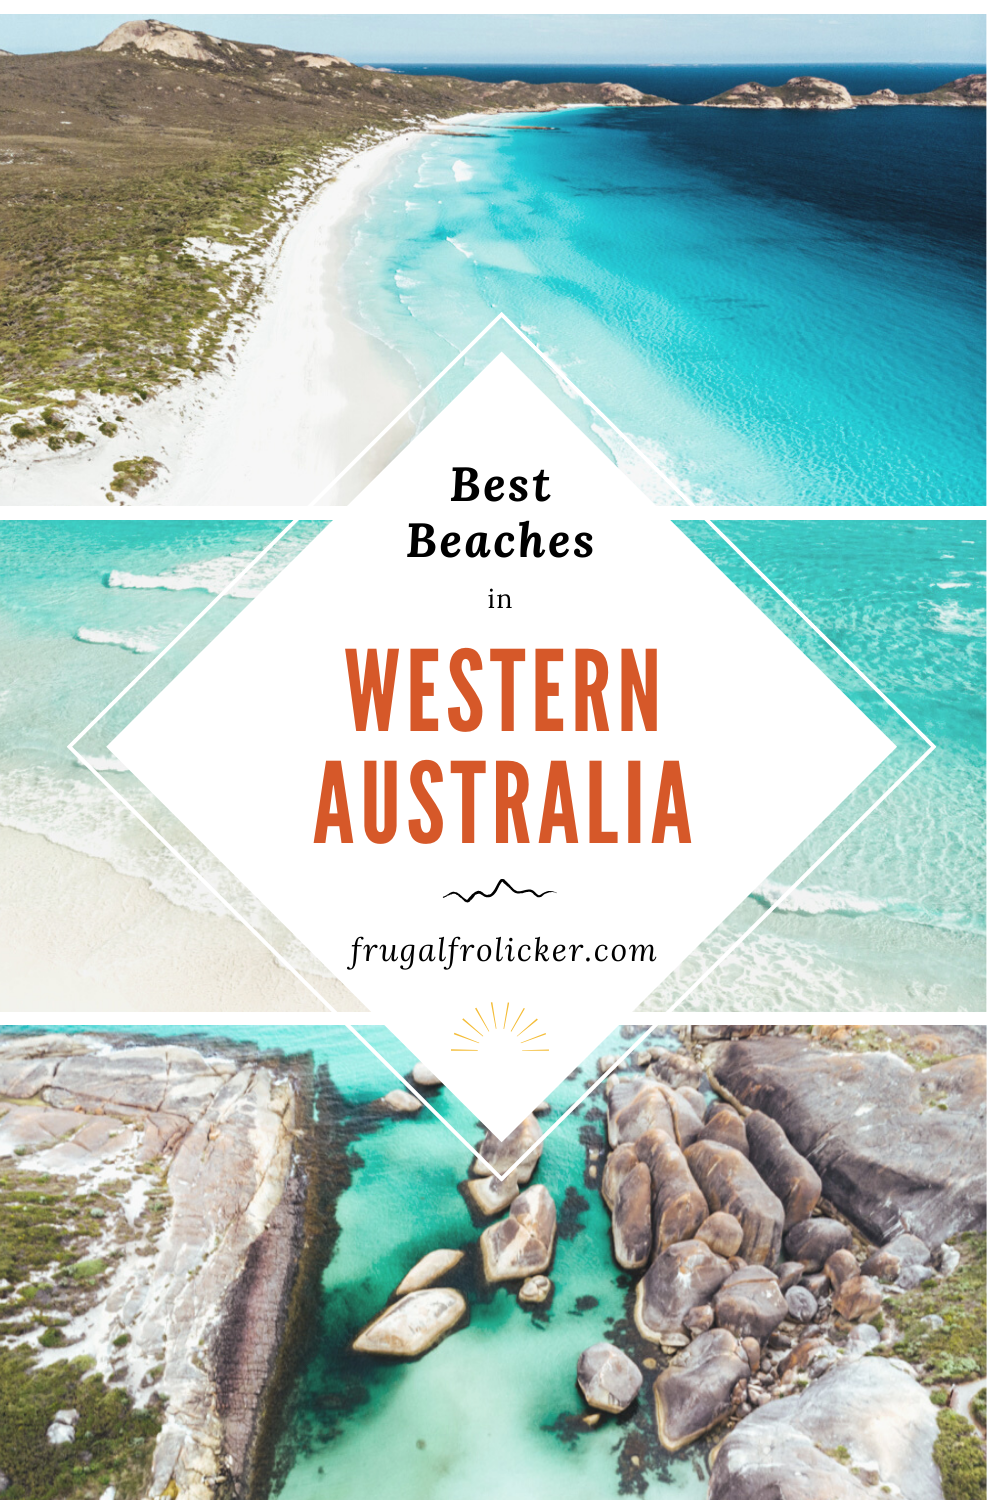 The Best Beaches in Western Australia